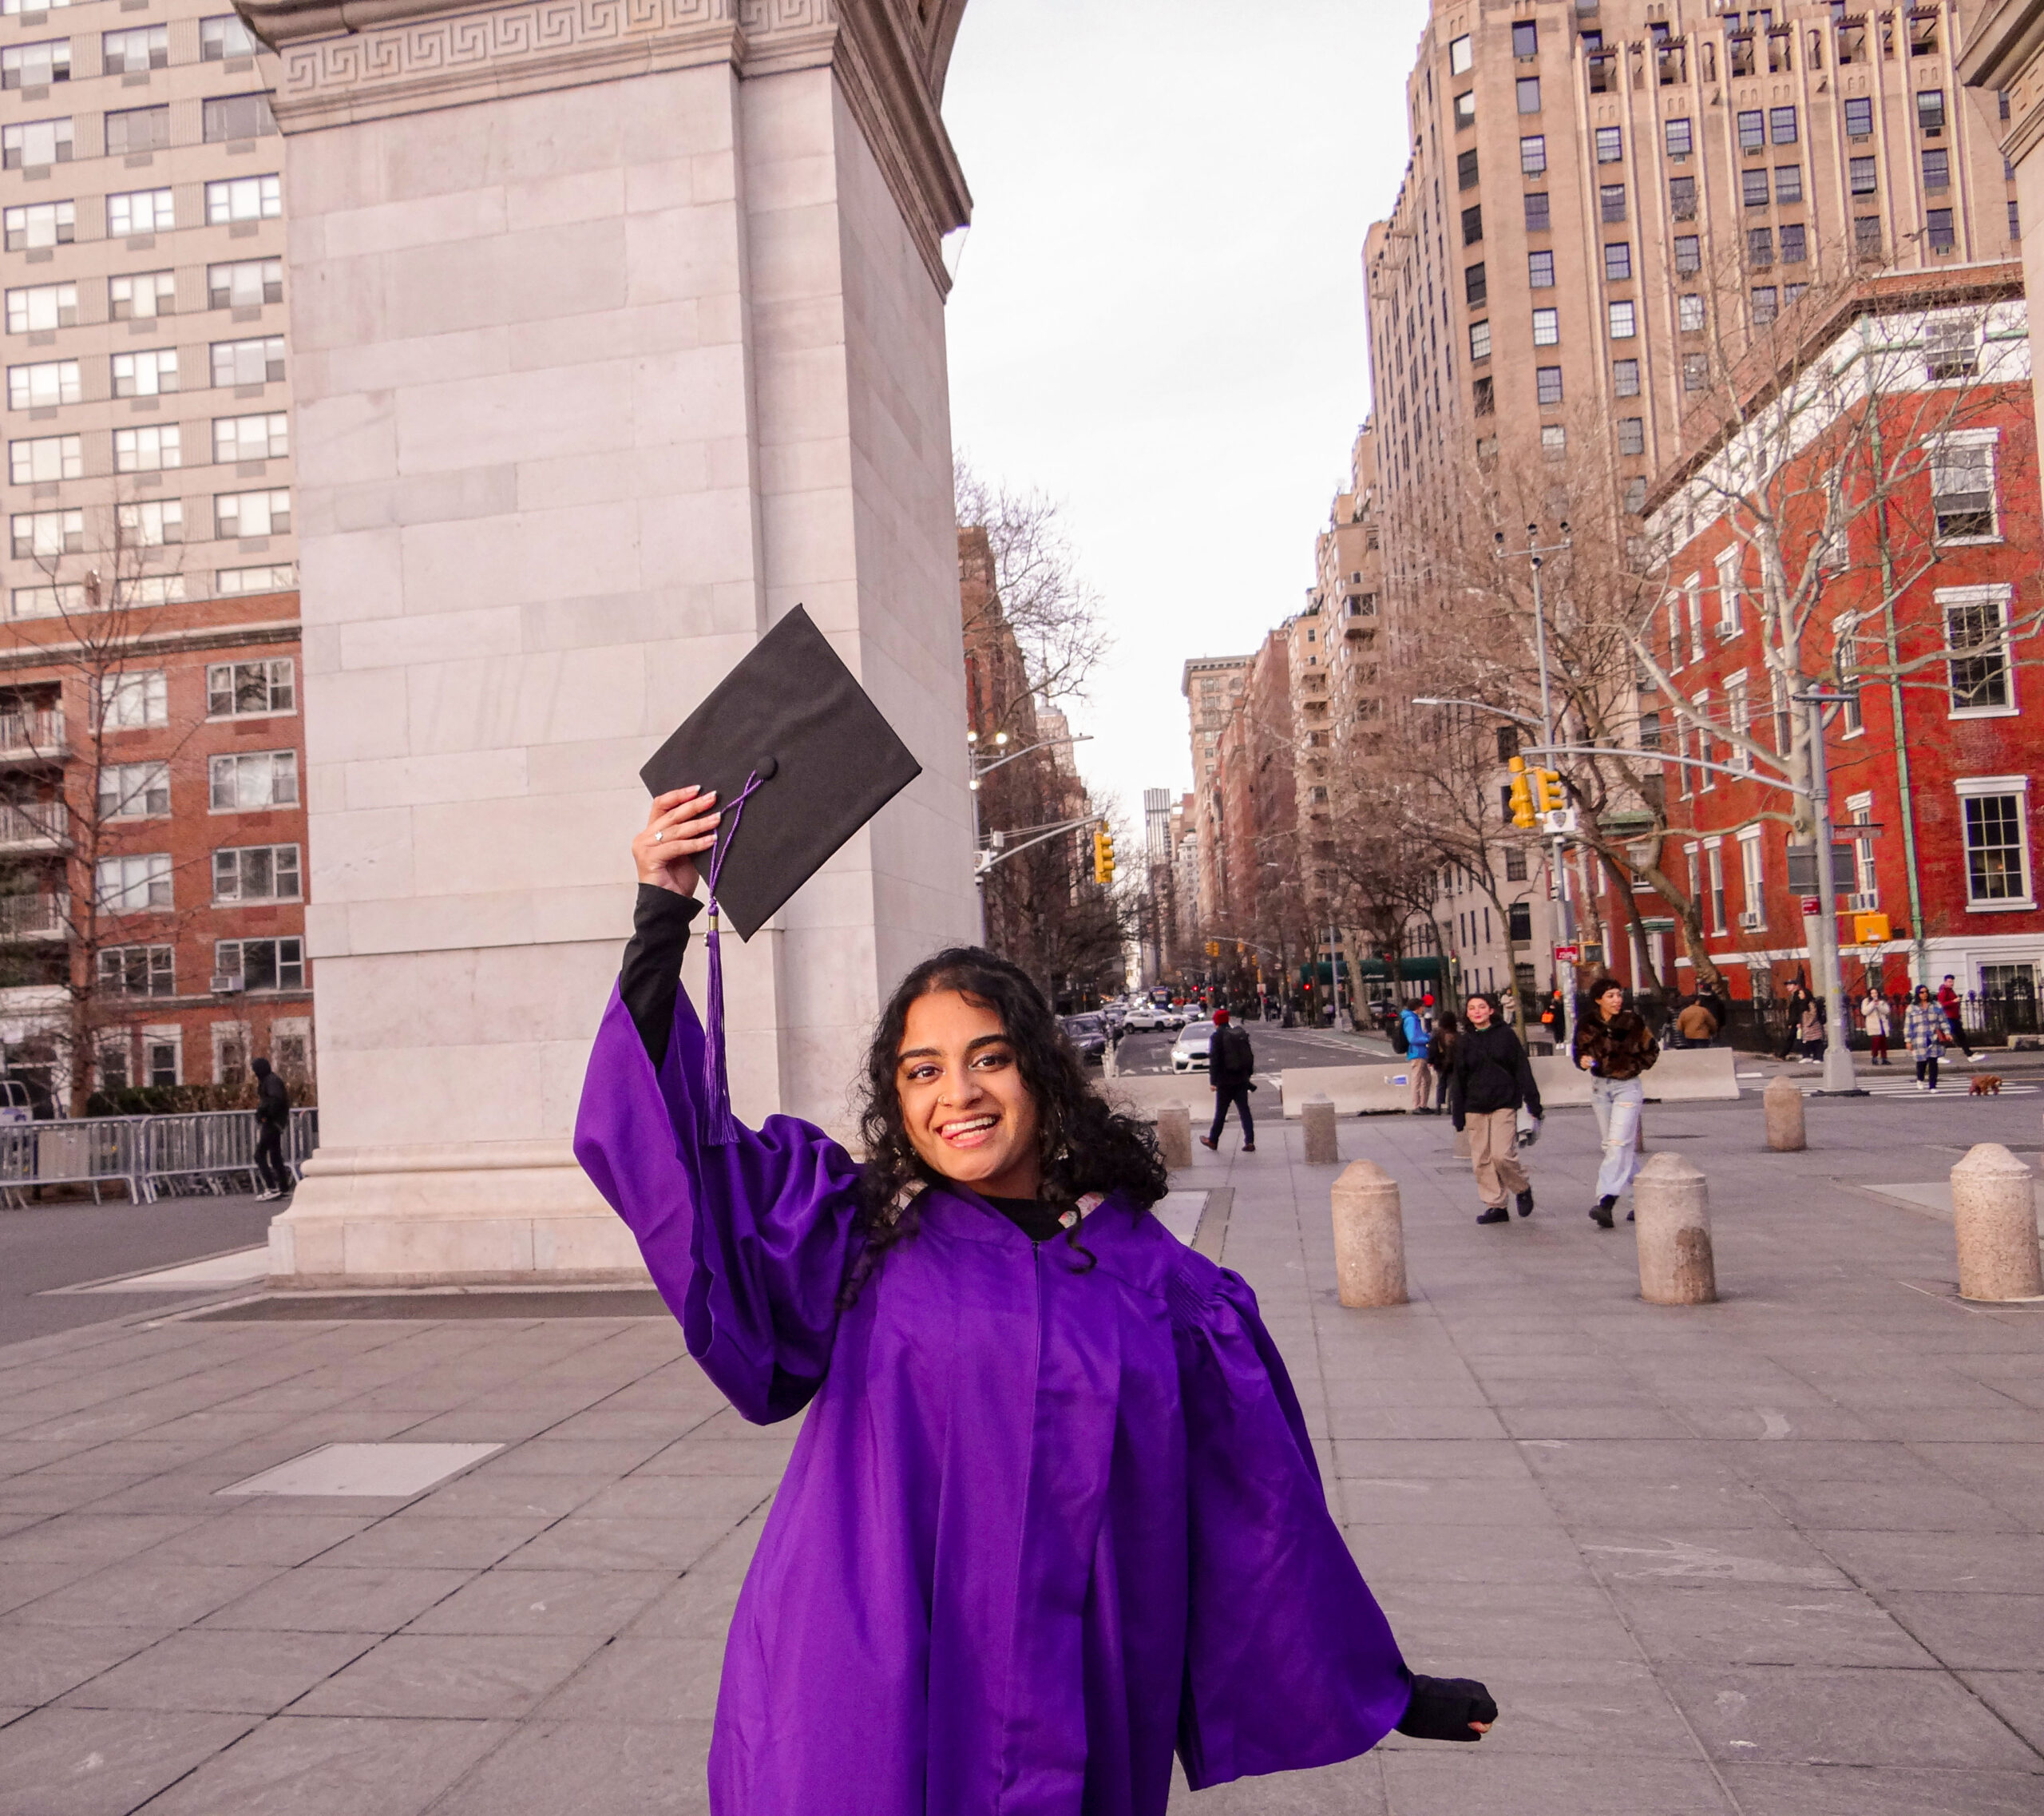 Eshika patel wearing graduation robes in Washington Square